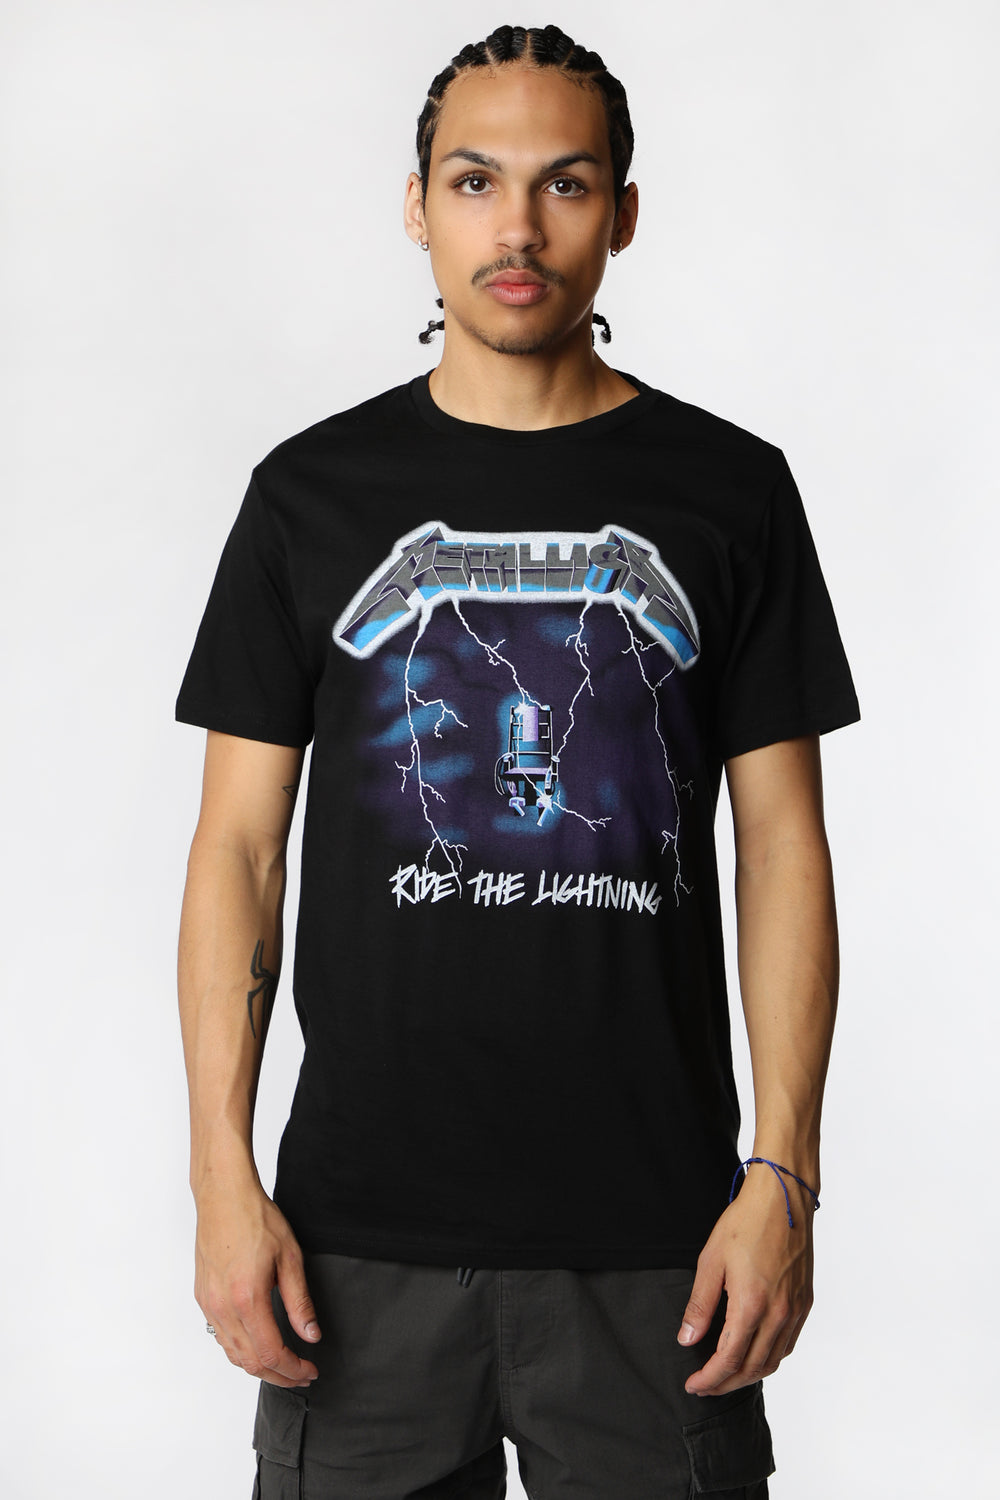 Mens Metallica Ride the Lightning T-Shirt Mens Metallica Ride the Lightning T-Shirt